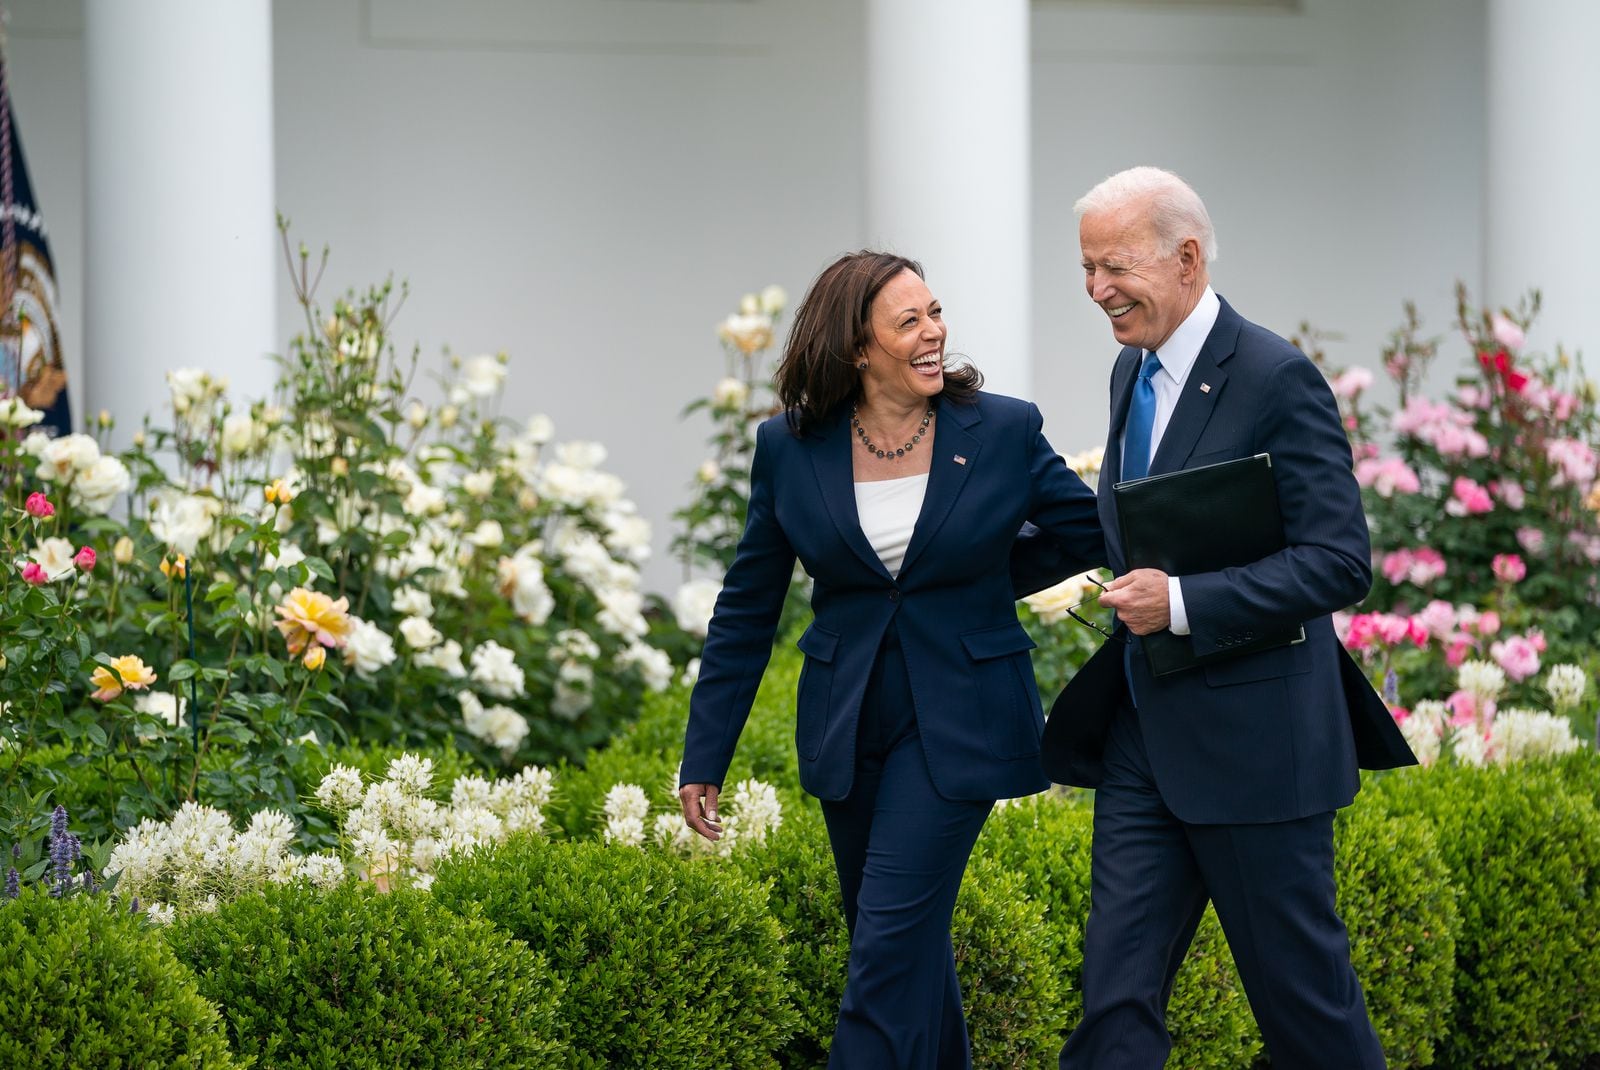 Joe Biden renuncia a candidatura presidencial de EU; pide a demócratas elegir a Kamala Harris